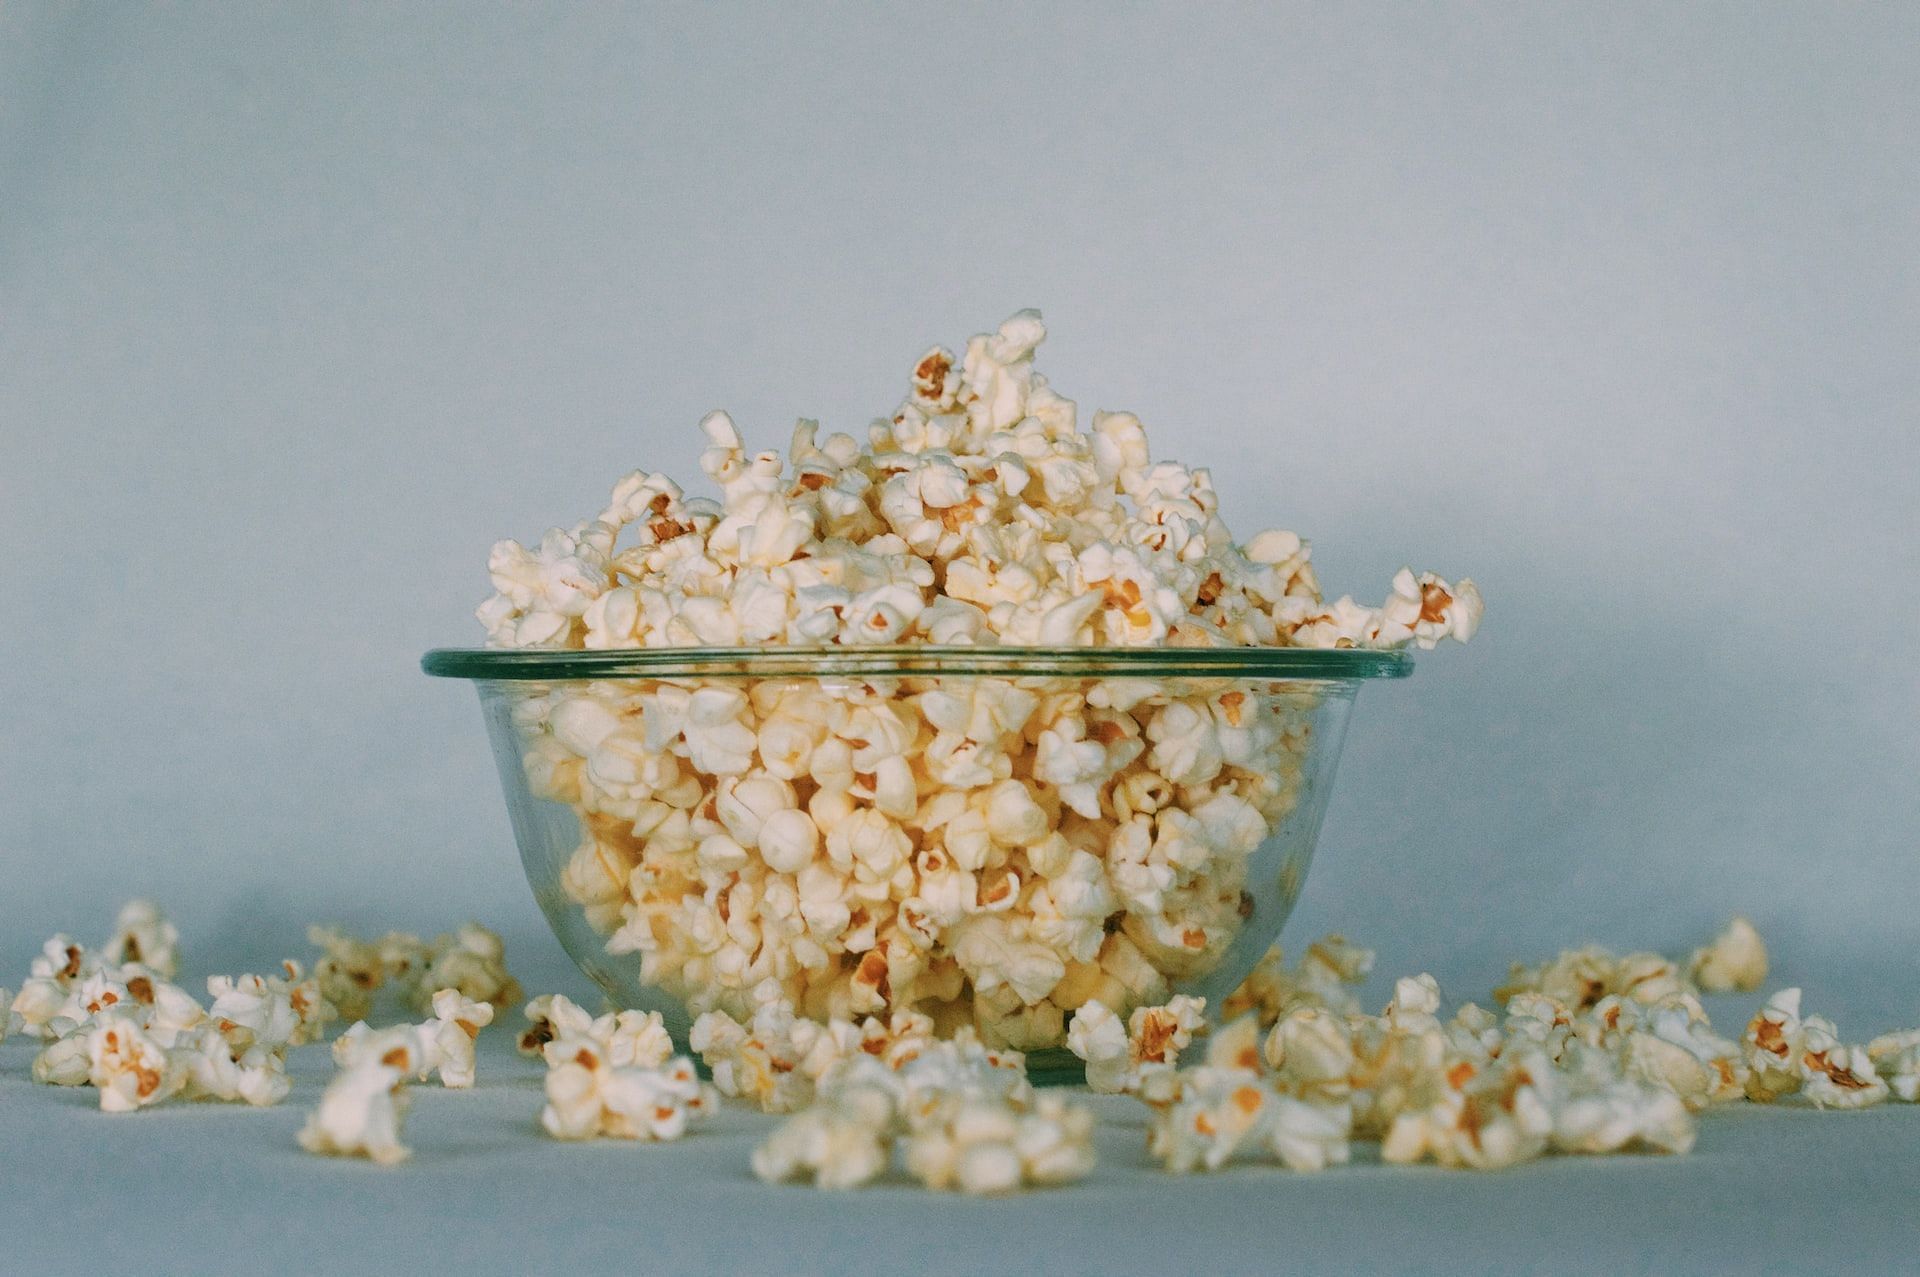 Popcorn (Photo via Georgia Vagim/Unsplash)